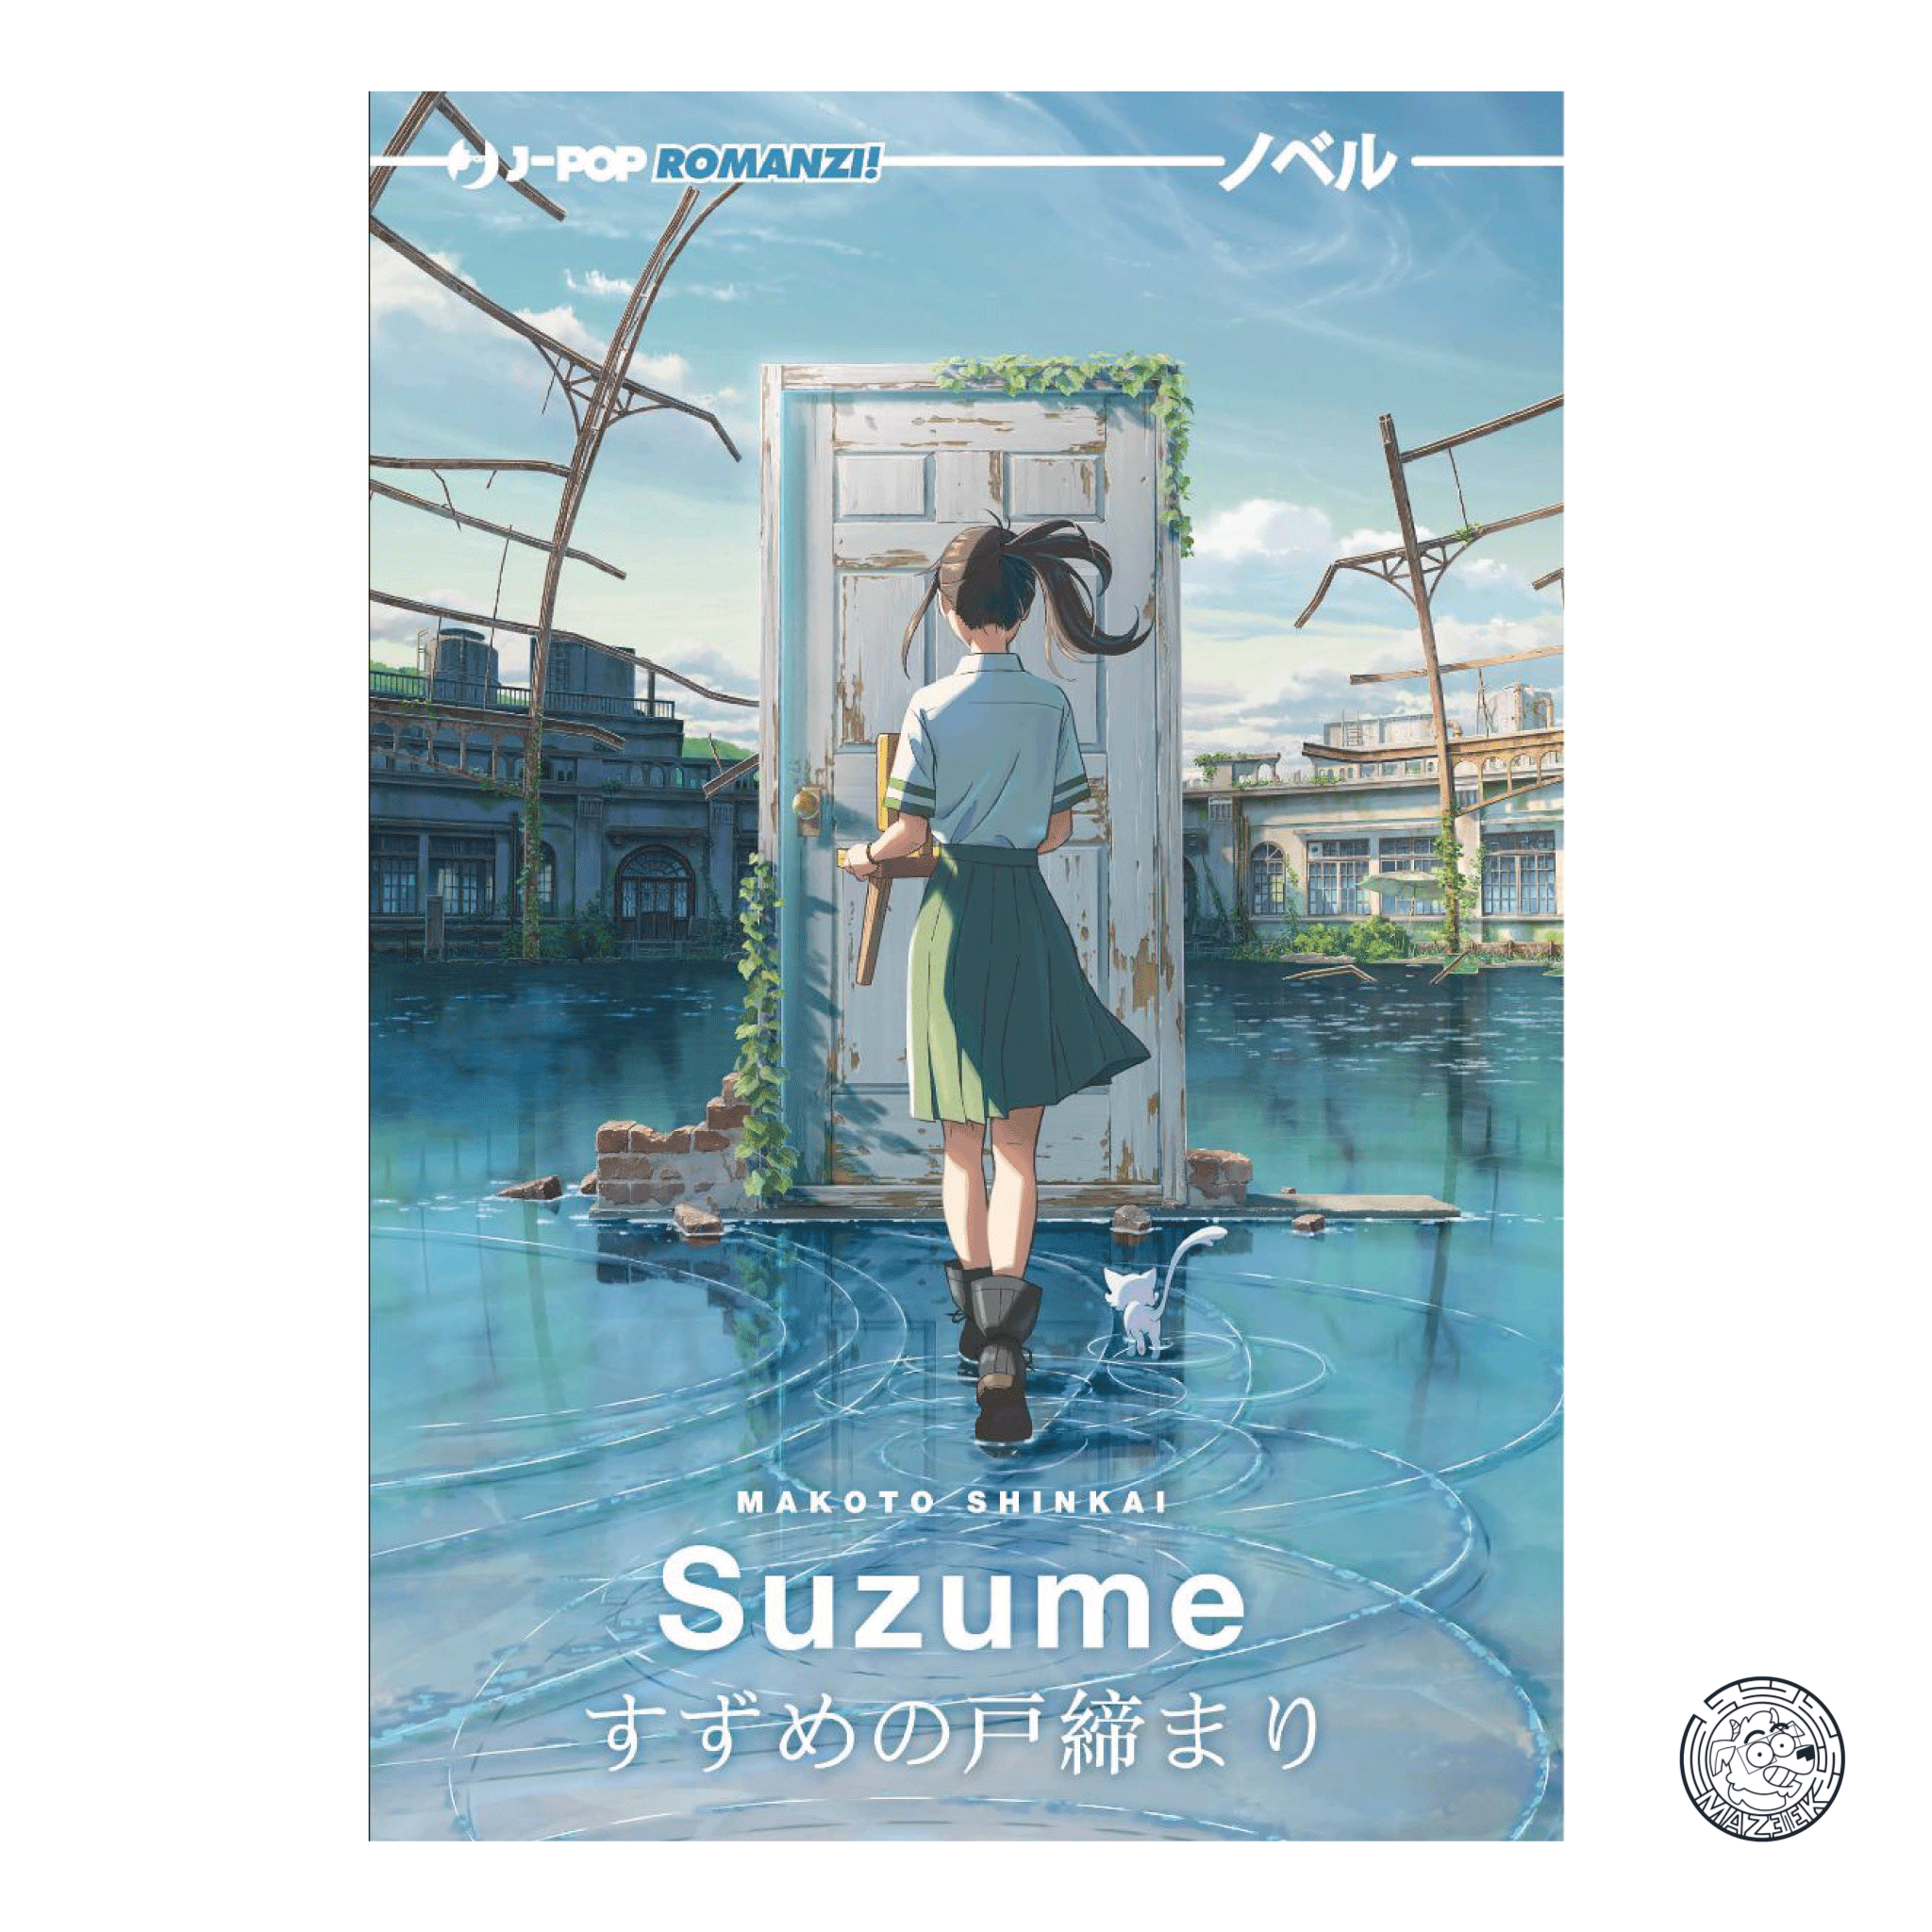 Suzume - Novel